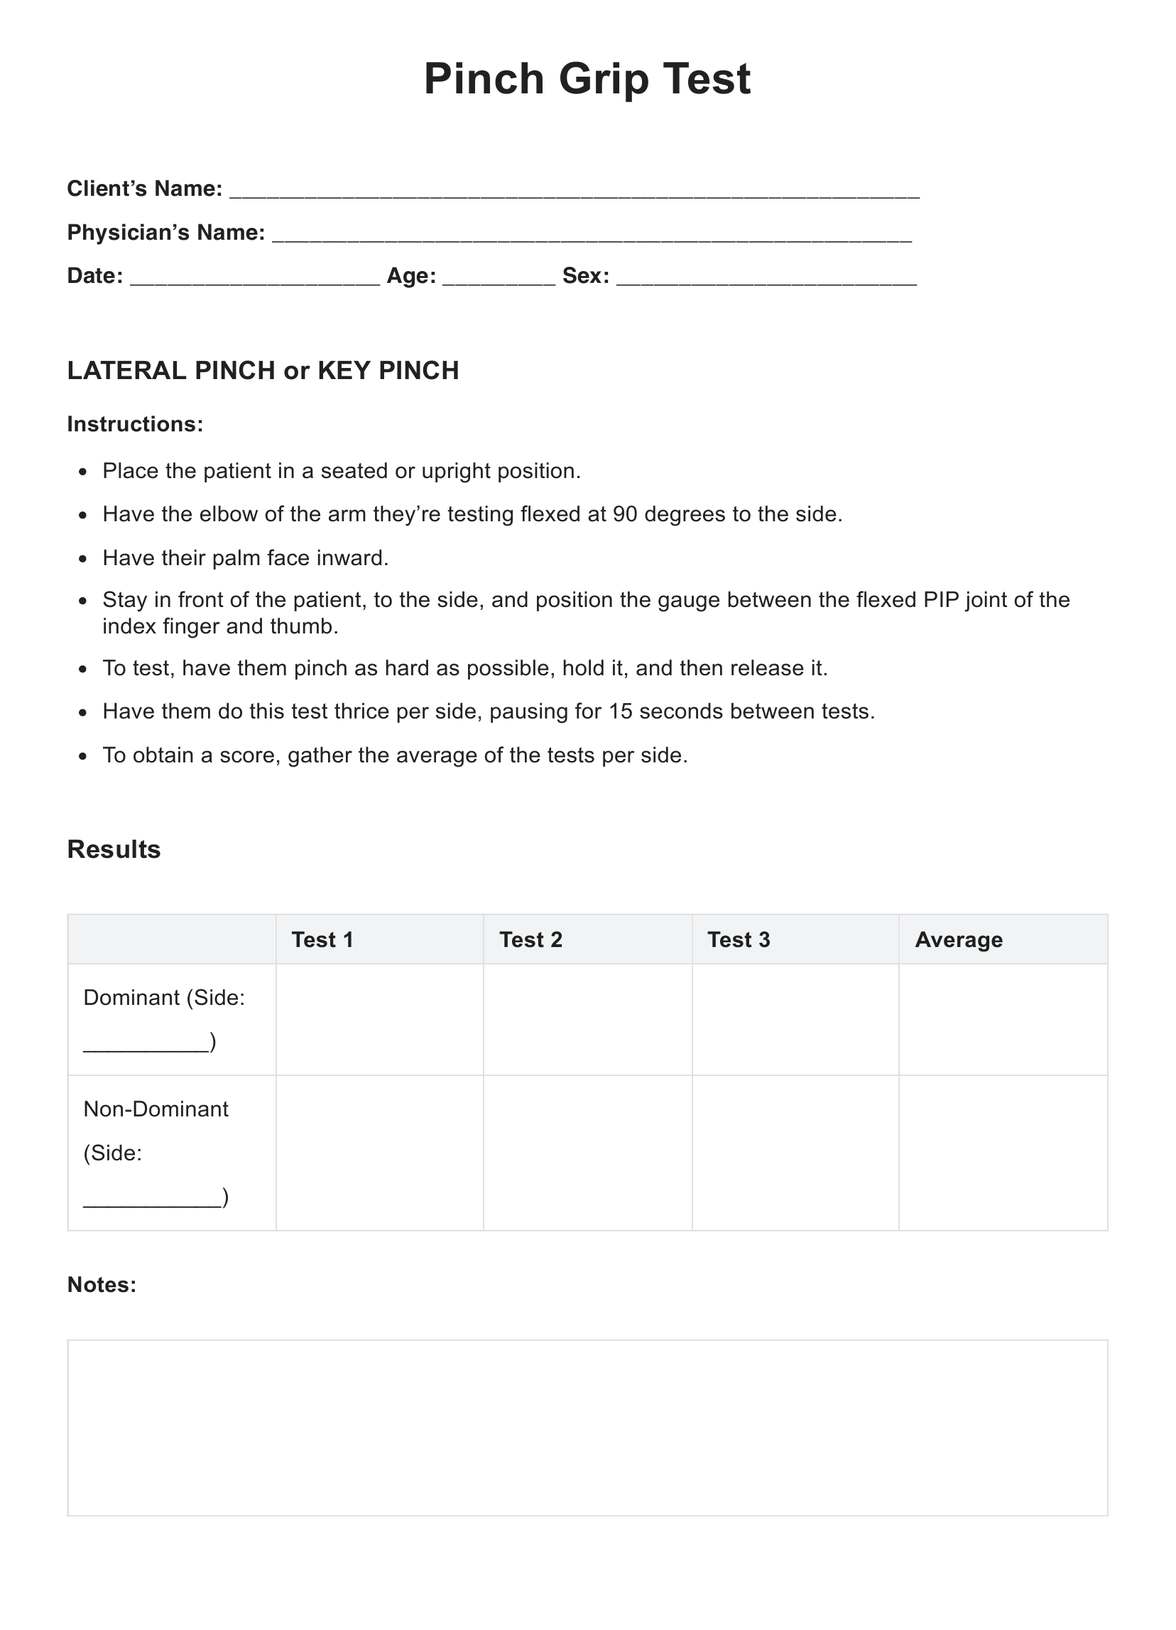 Pinch Grip Test PDF Example